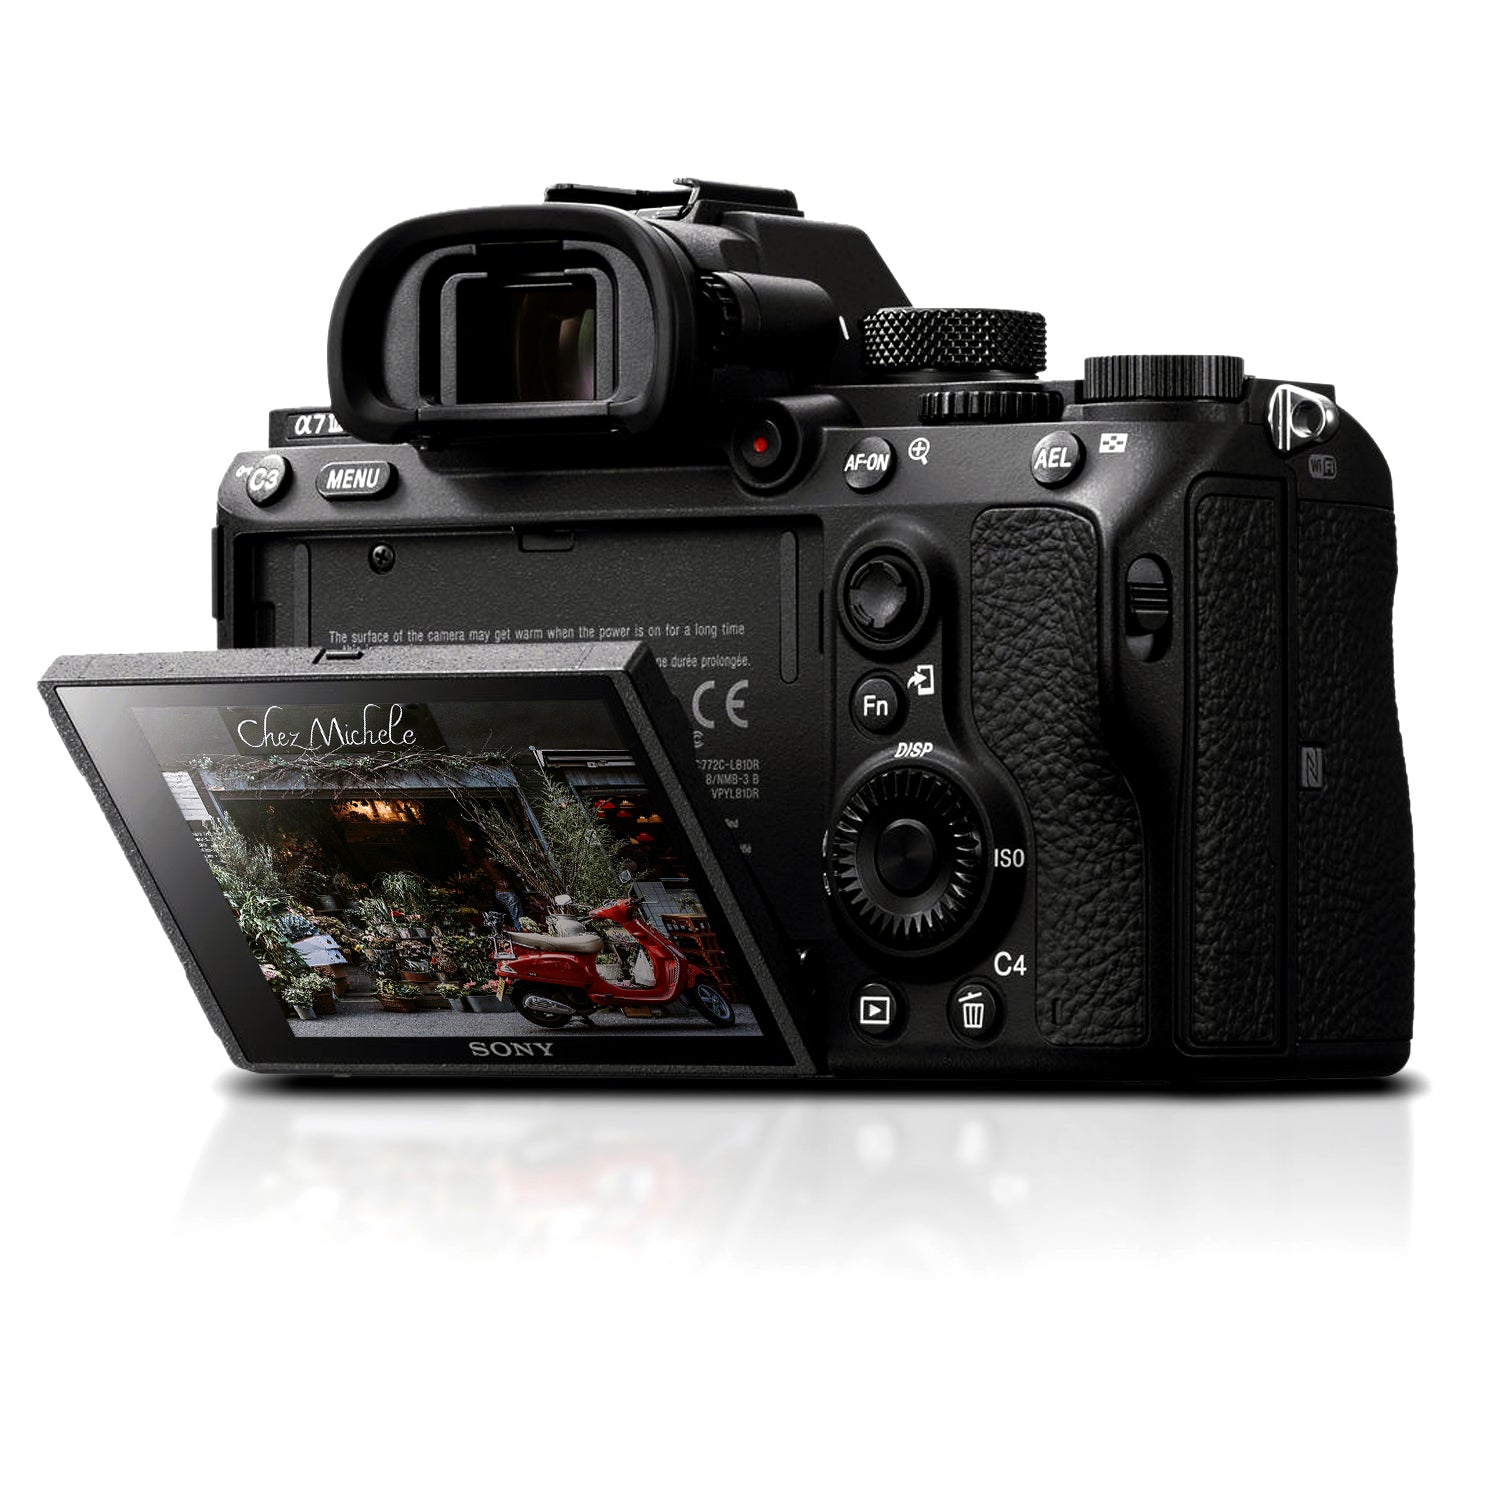 Sony Alpha a7 III Mirrorless Camera Body Only ILCE7M3/B - Pro Bundle